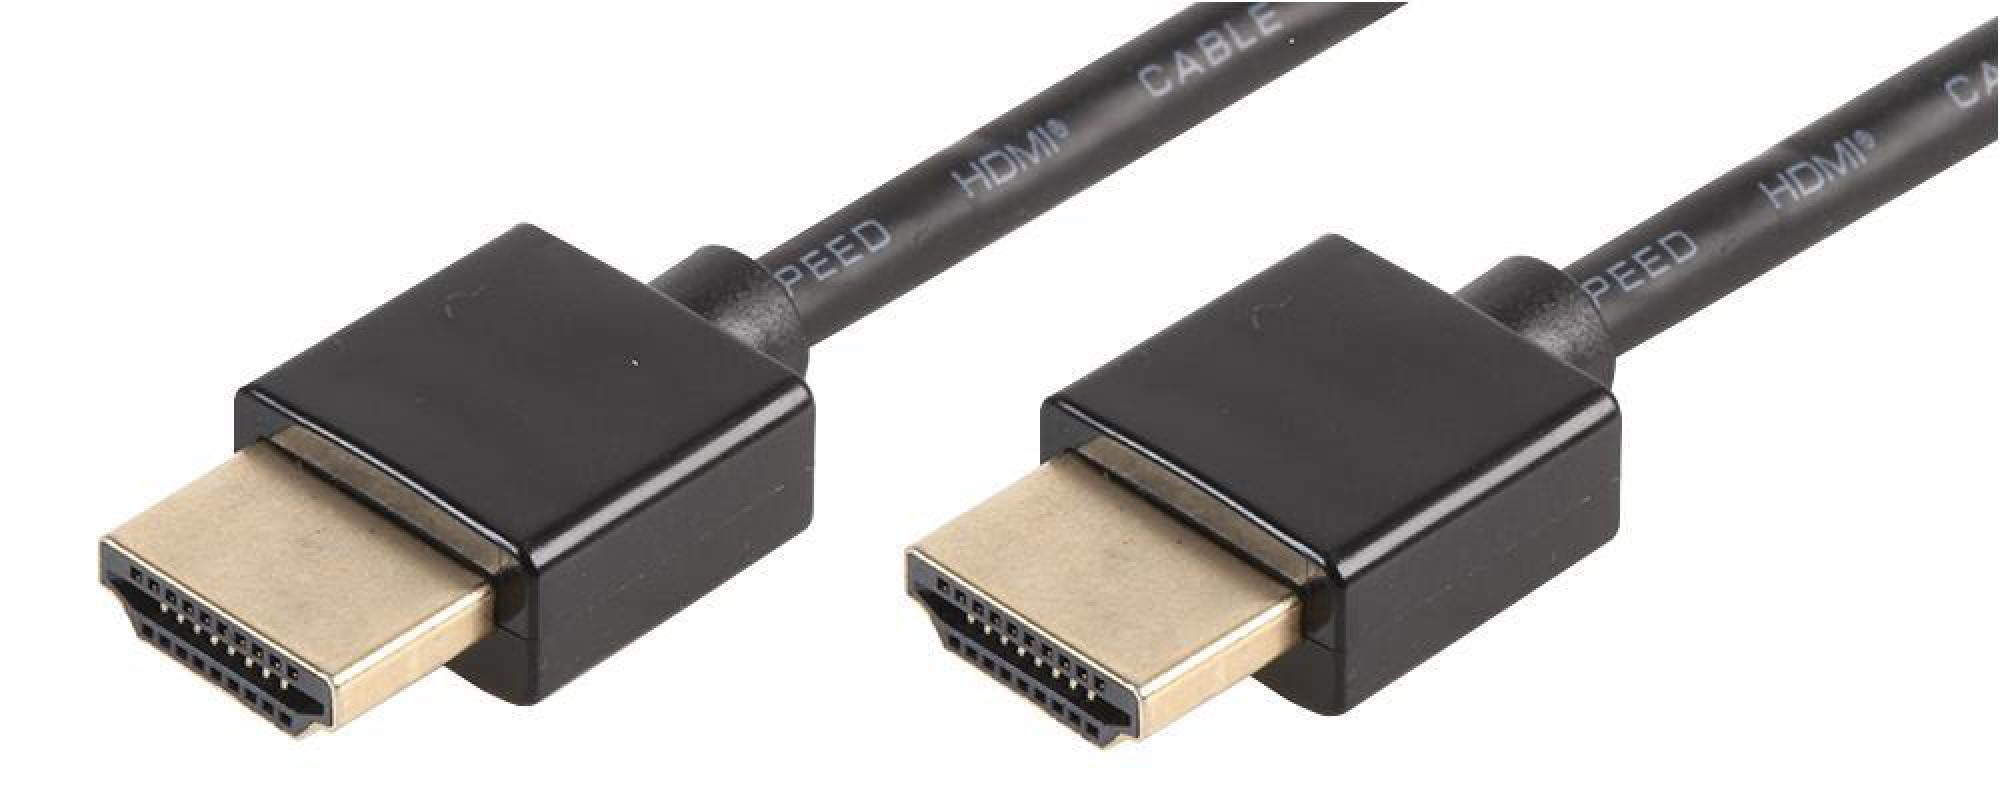 PRO SIGNAL - High Speed 4K UHD Slim HDMI Lead with Ethernet, 3m Black 